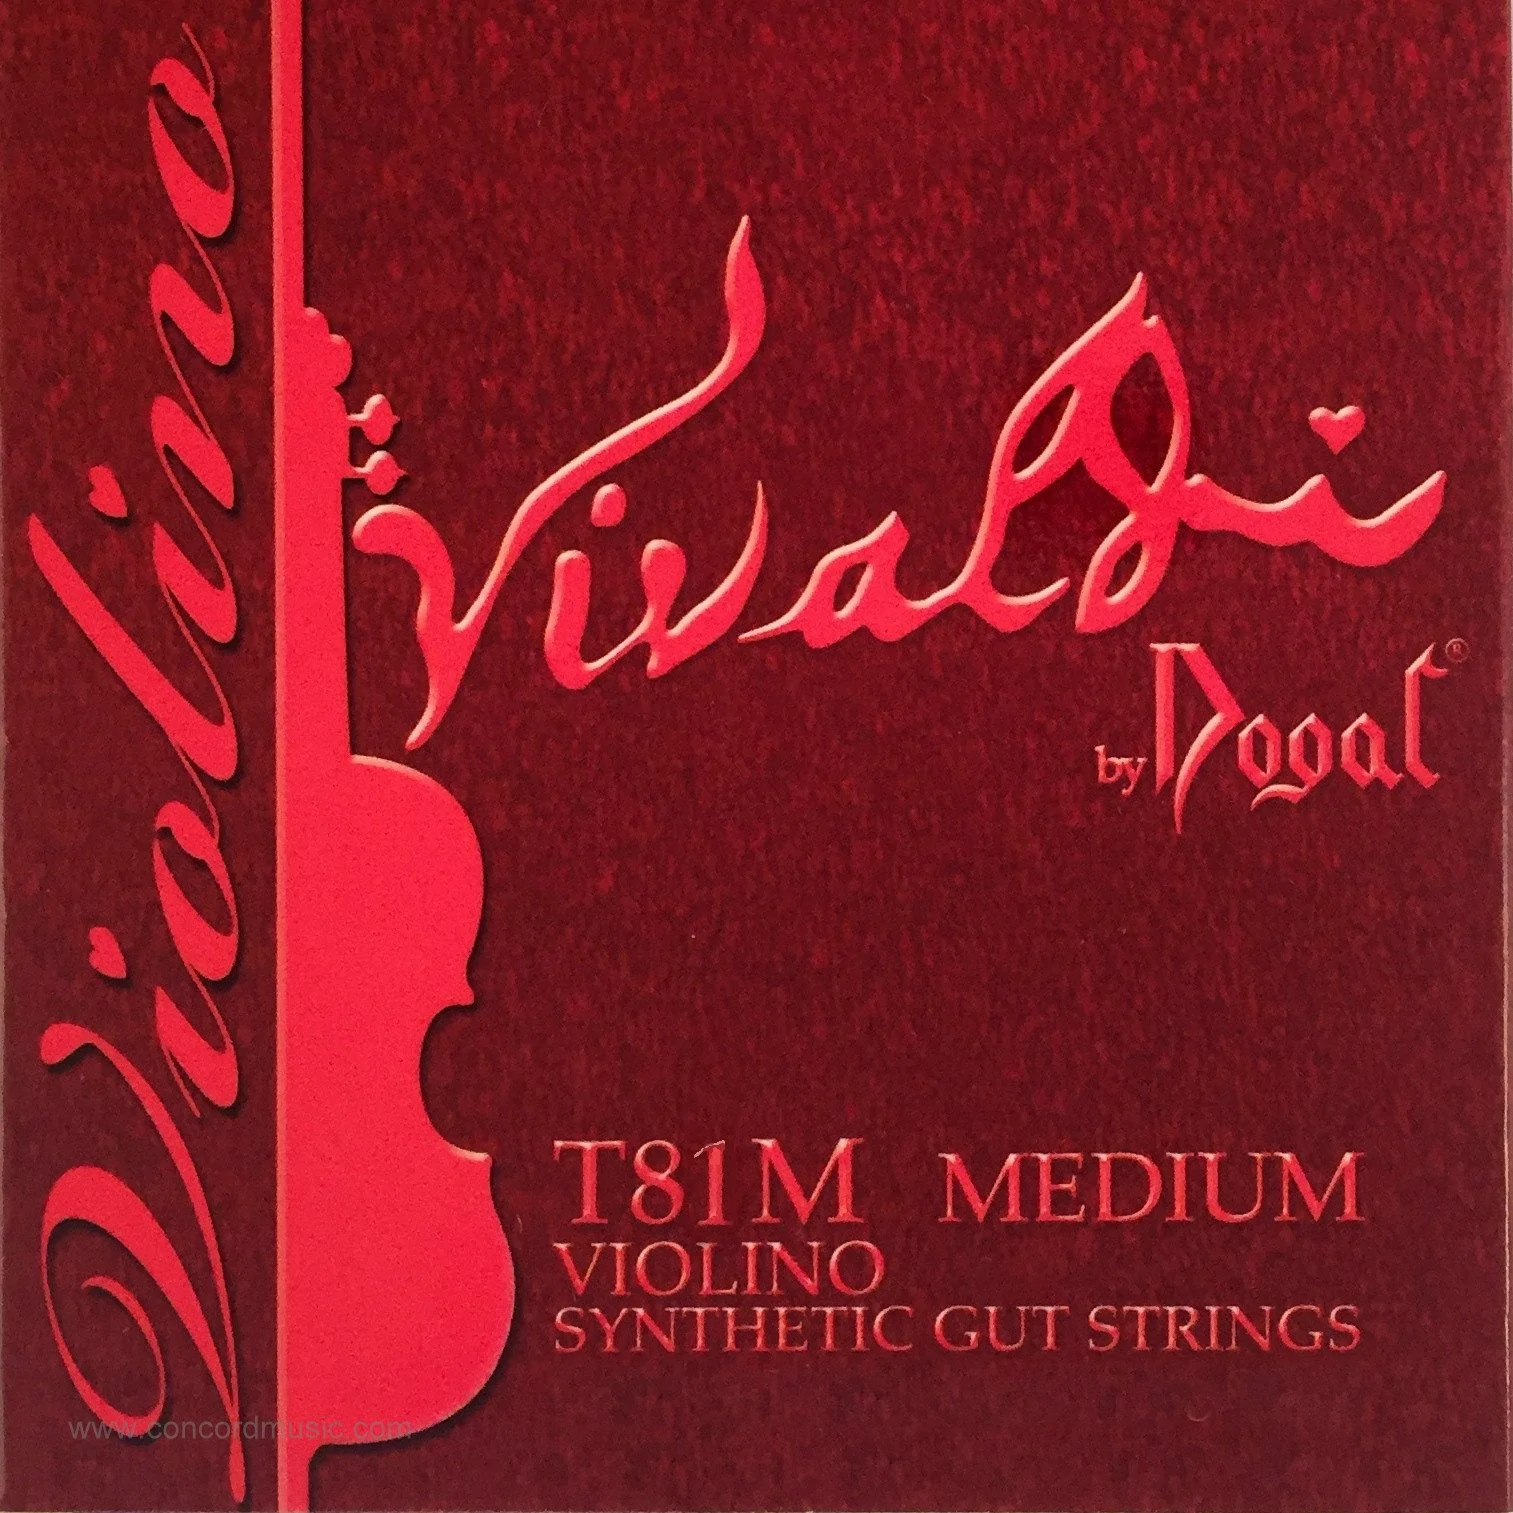 Комплект струн для скрипки Dogal Vivaldi T81 Medium T81M